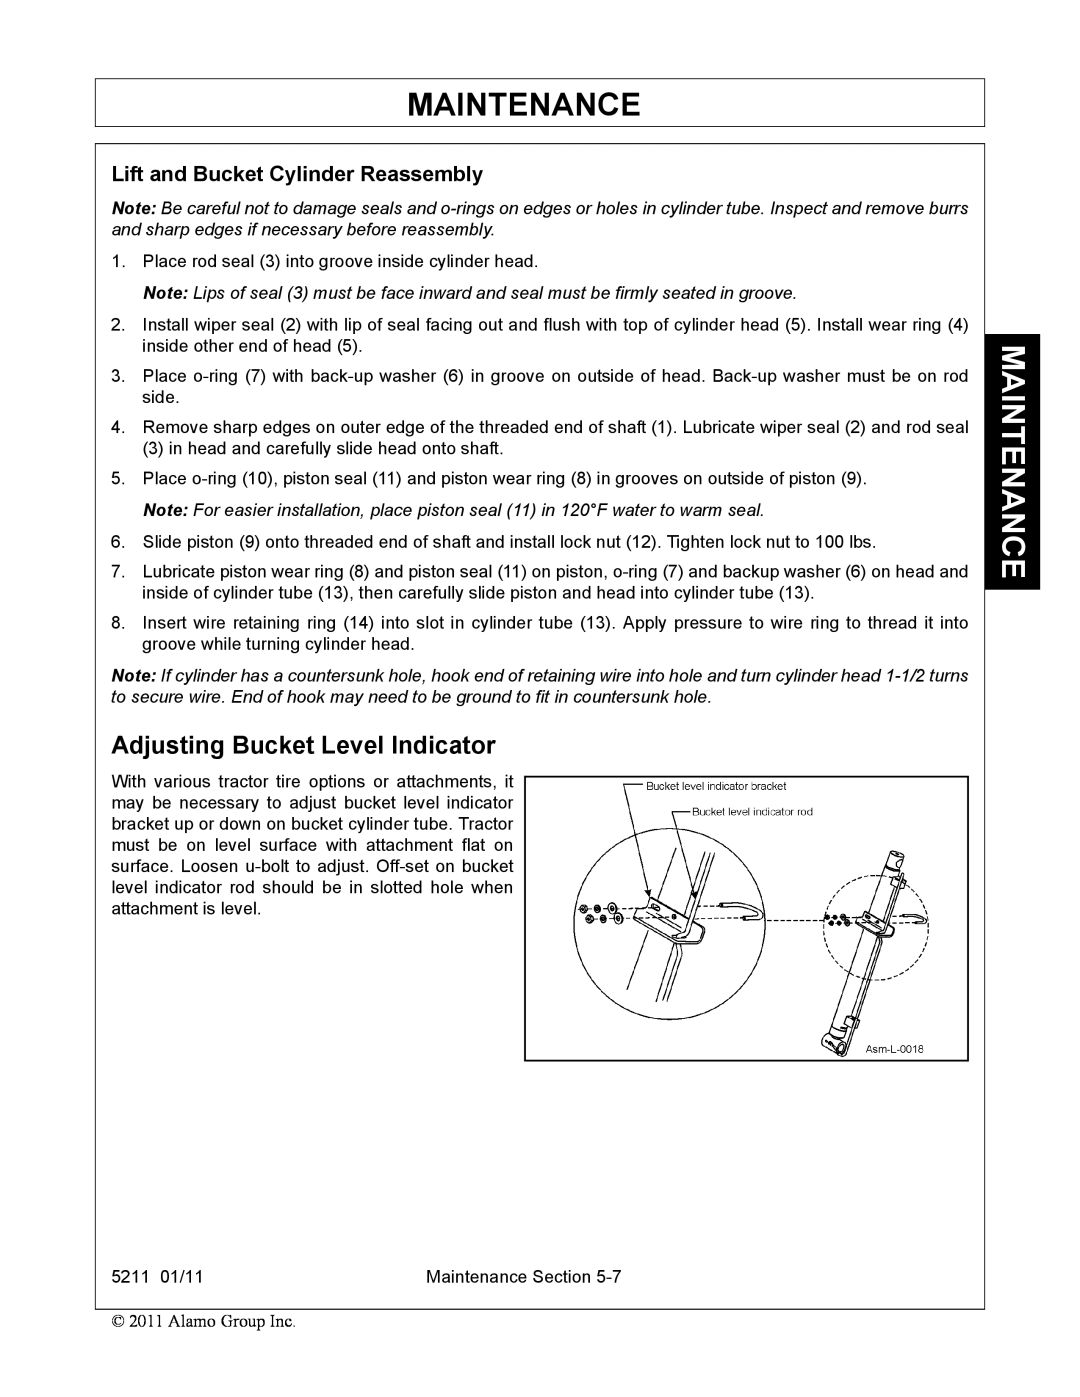 Servis-Rhino 5211 manual Maintenance, Adjusting Bucket Level Indicator, Lift and Bucket Cylinder Reassembly 